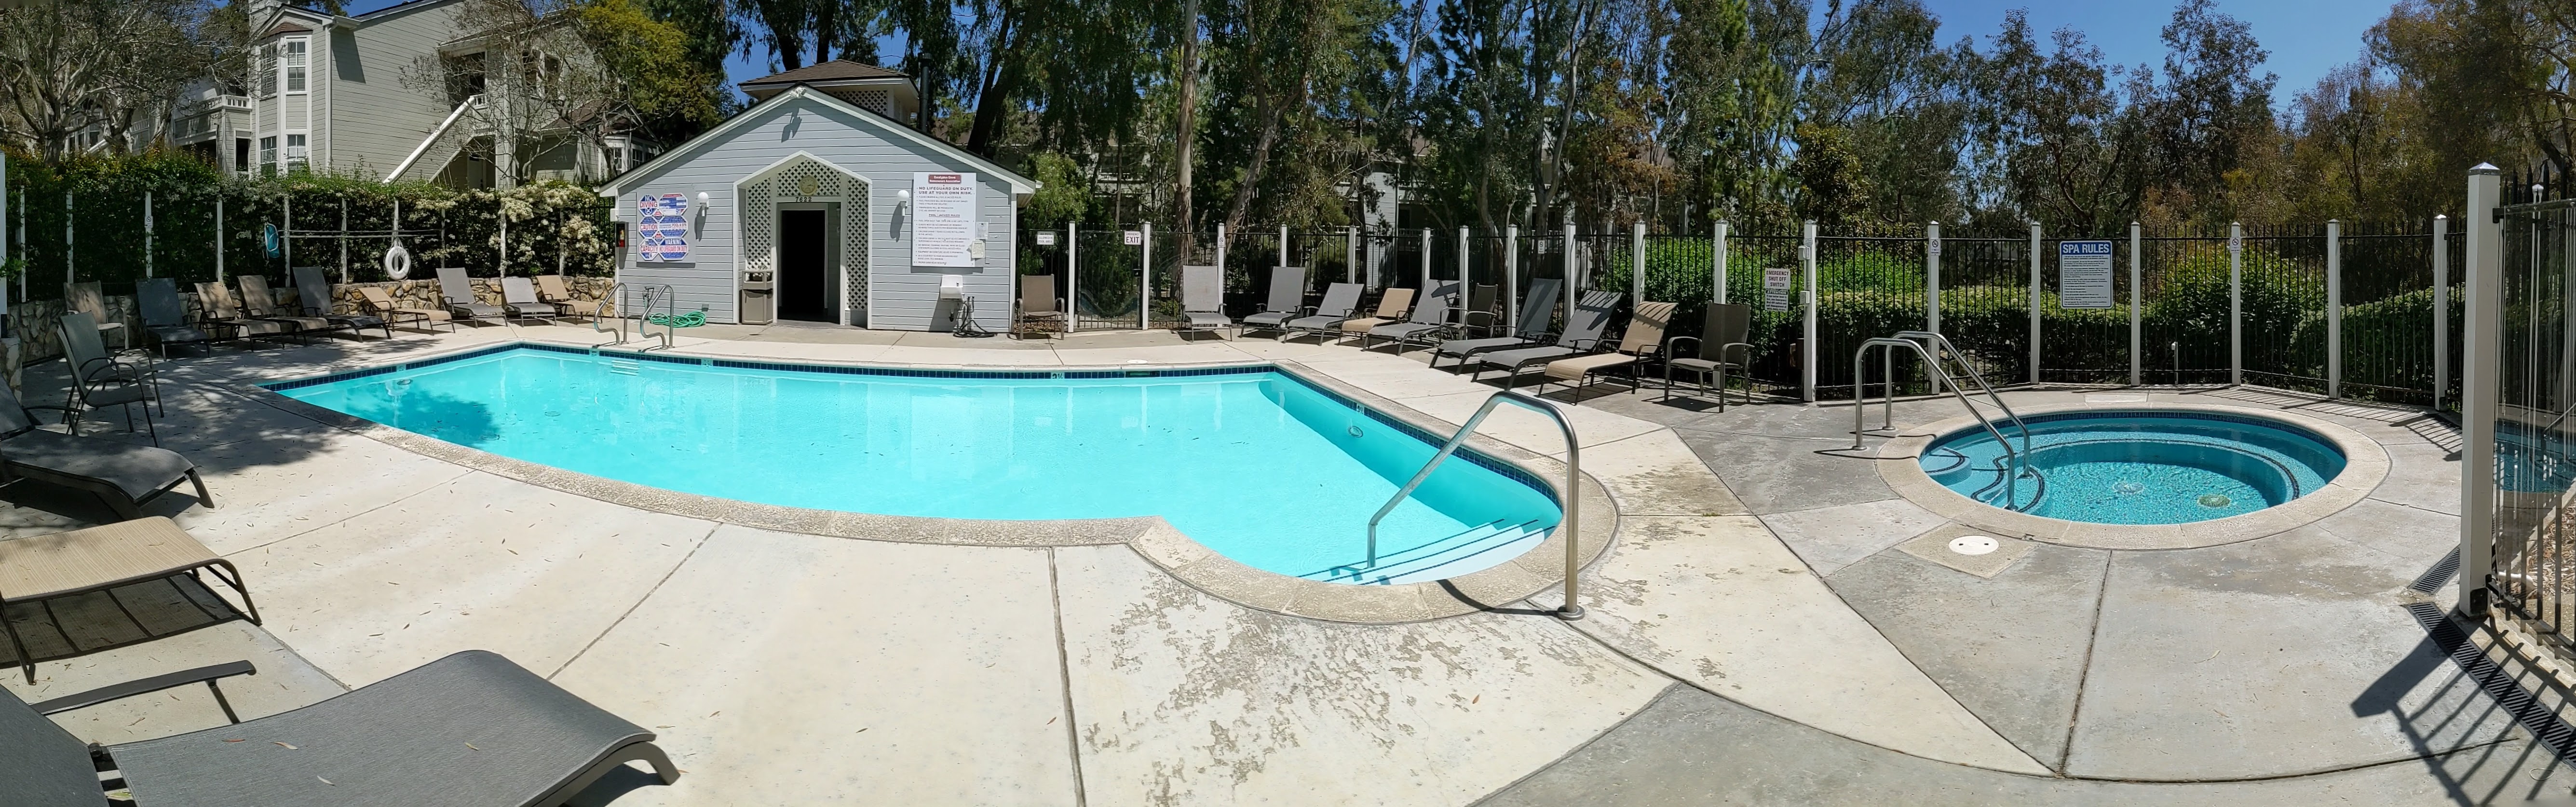 Pool House Panorama 1.jpg